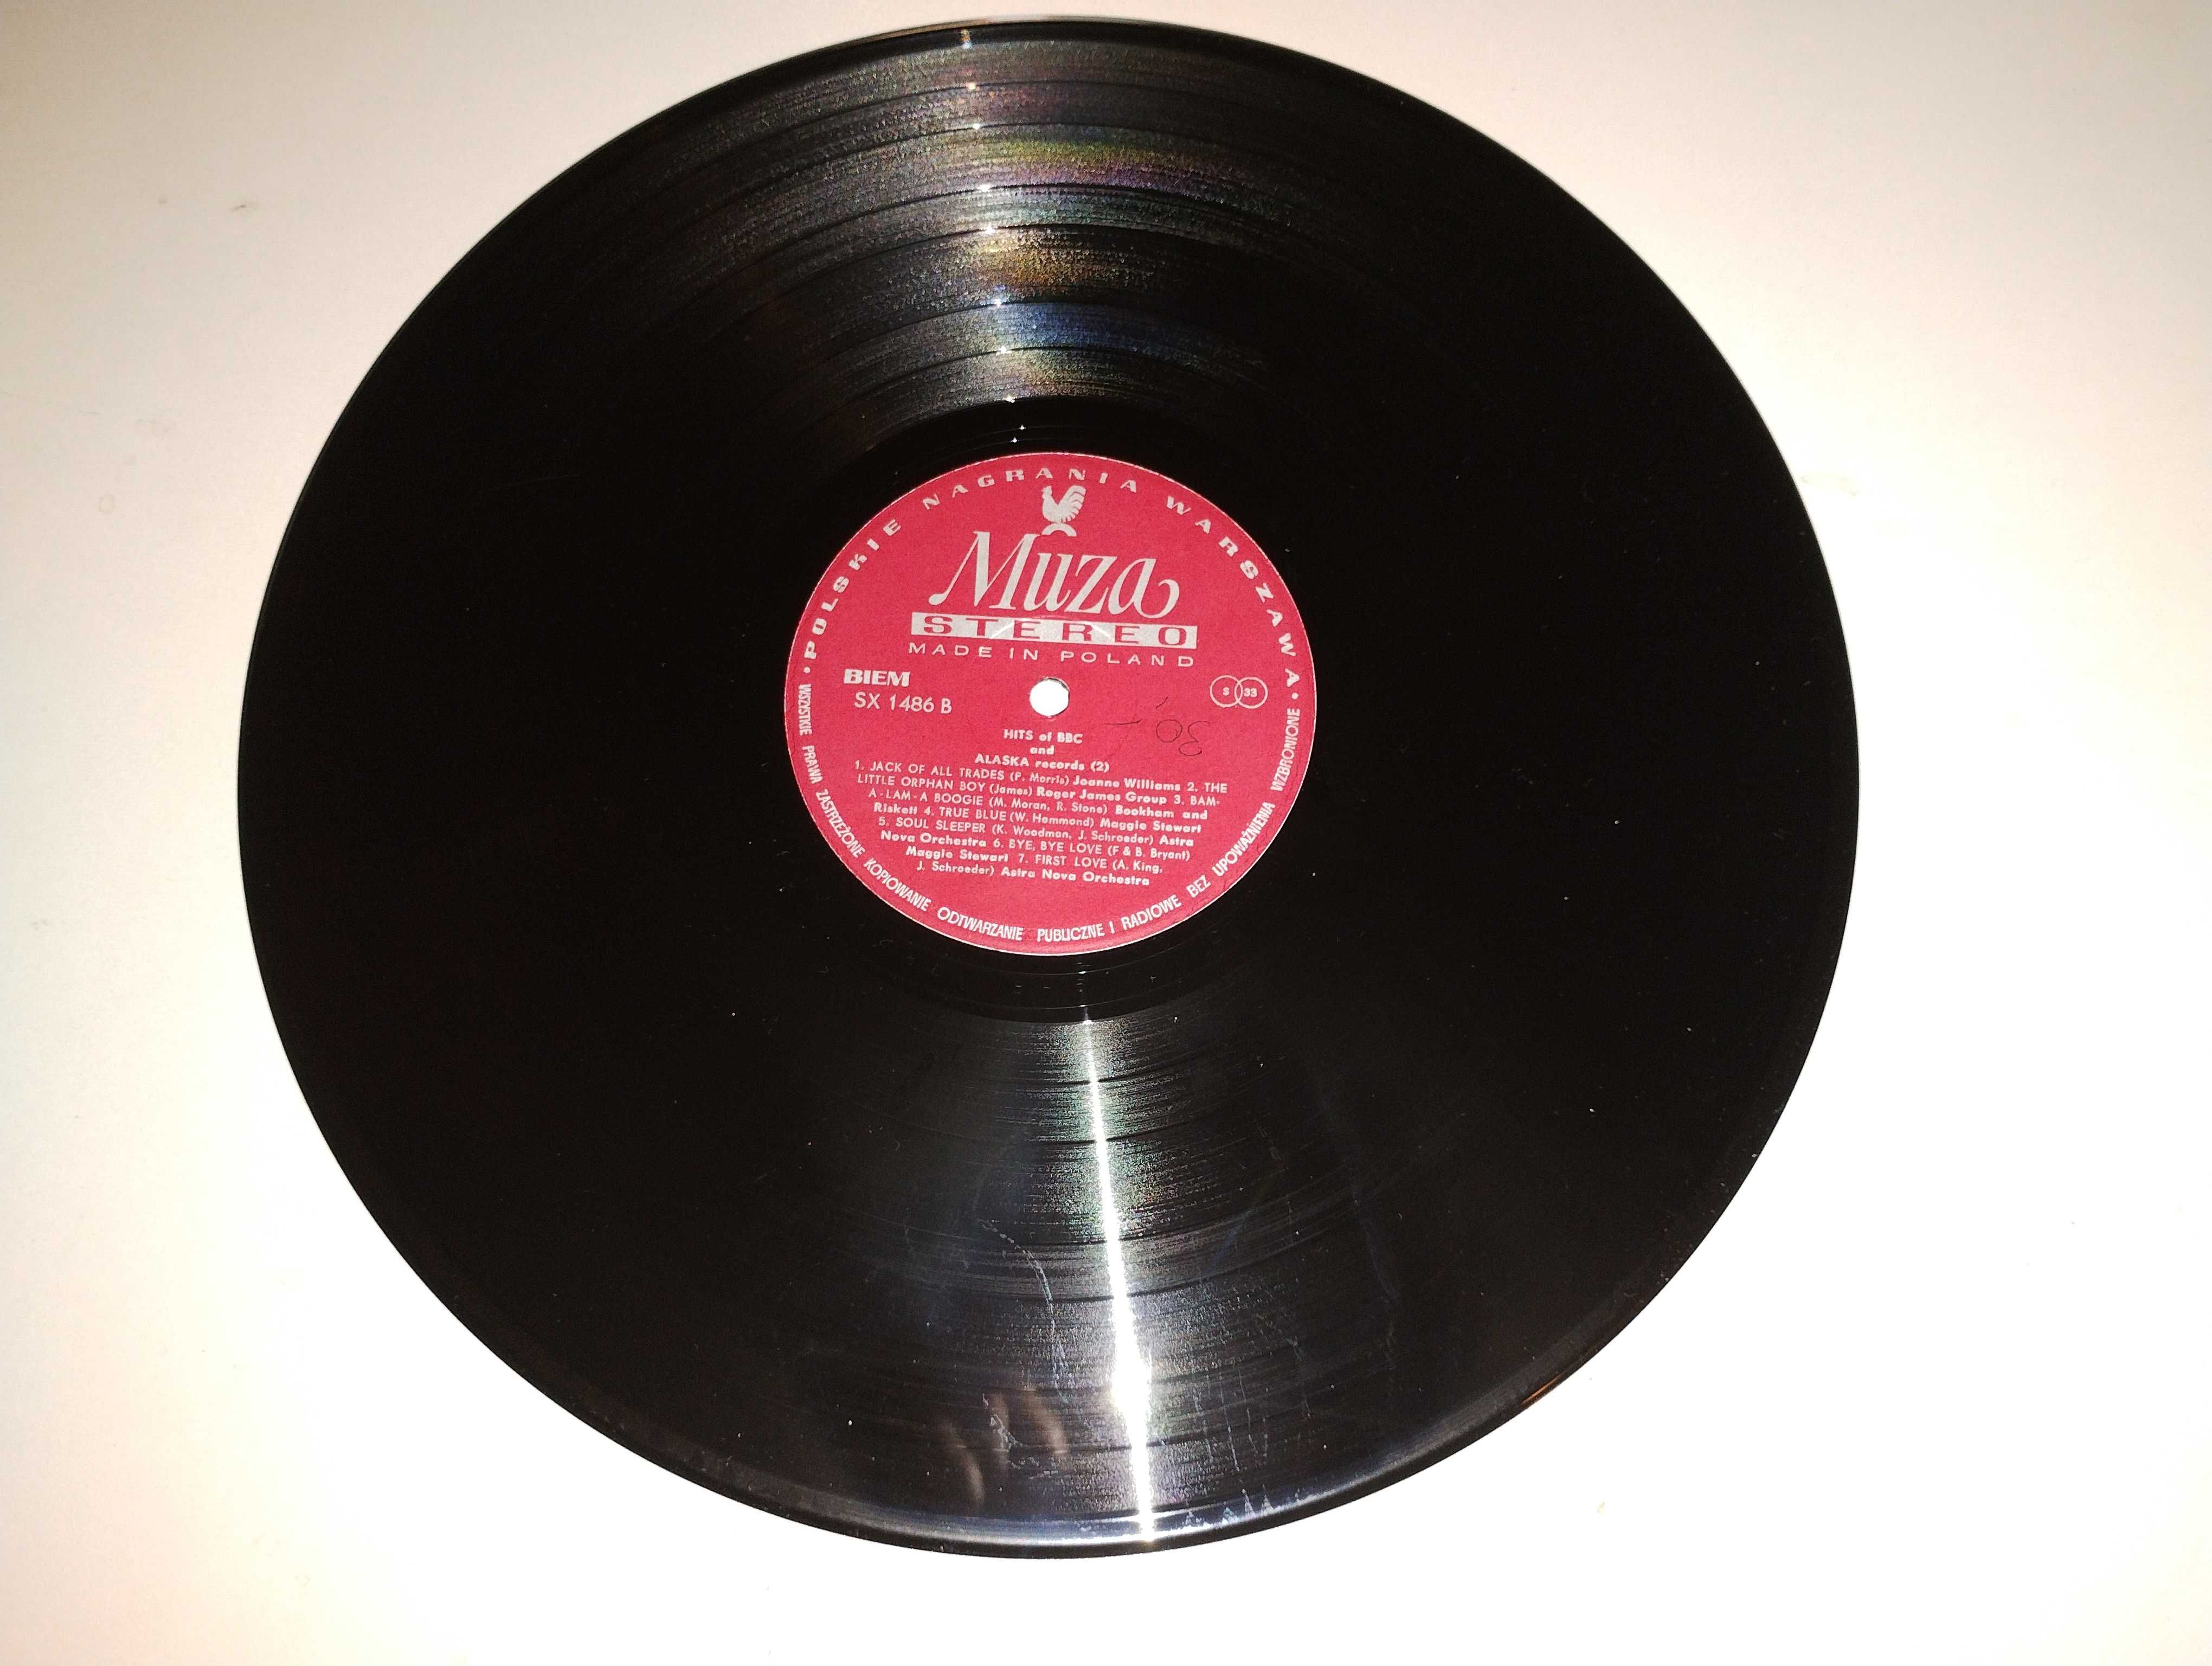 Hits of BBC and Alaska Records 2 LP